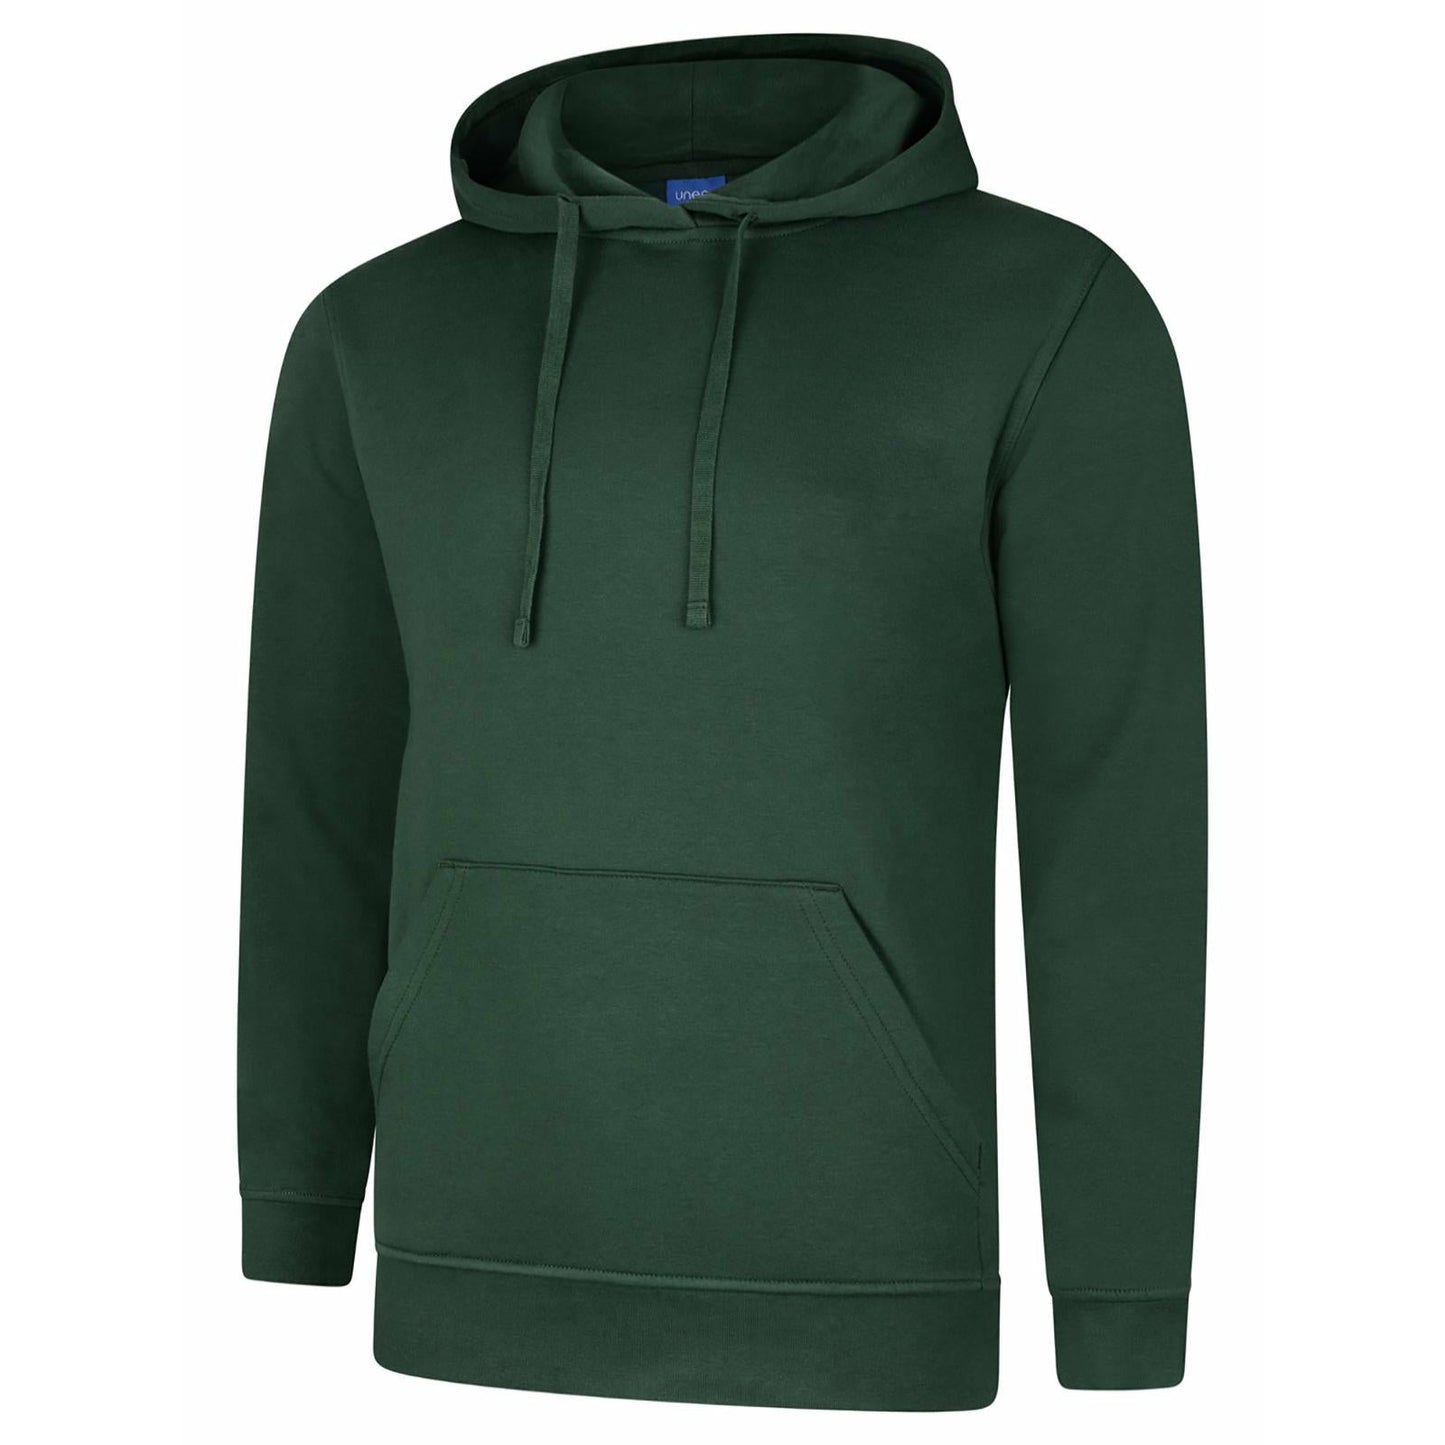 Deluxe Hooded Sweatshirt (XS - M) Bottle Green